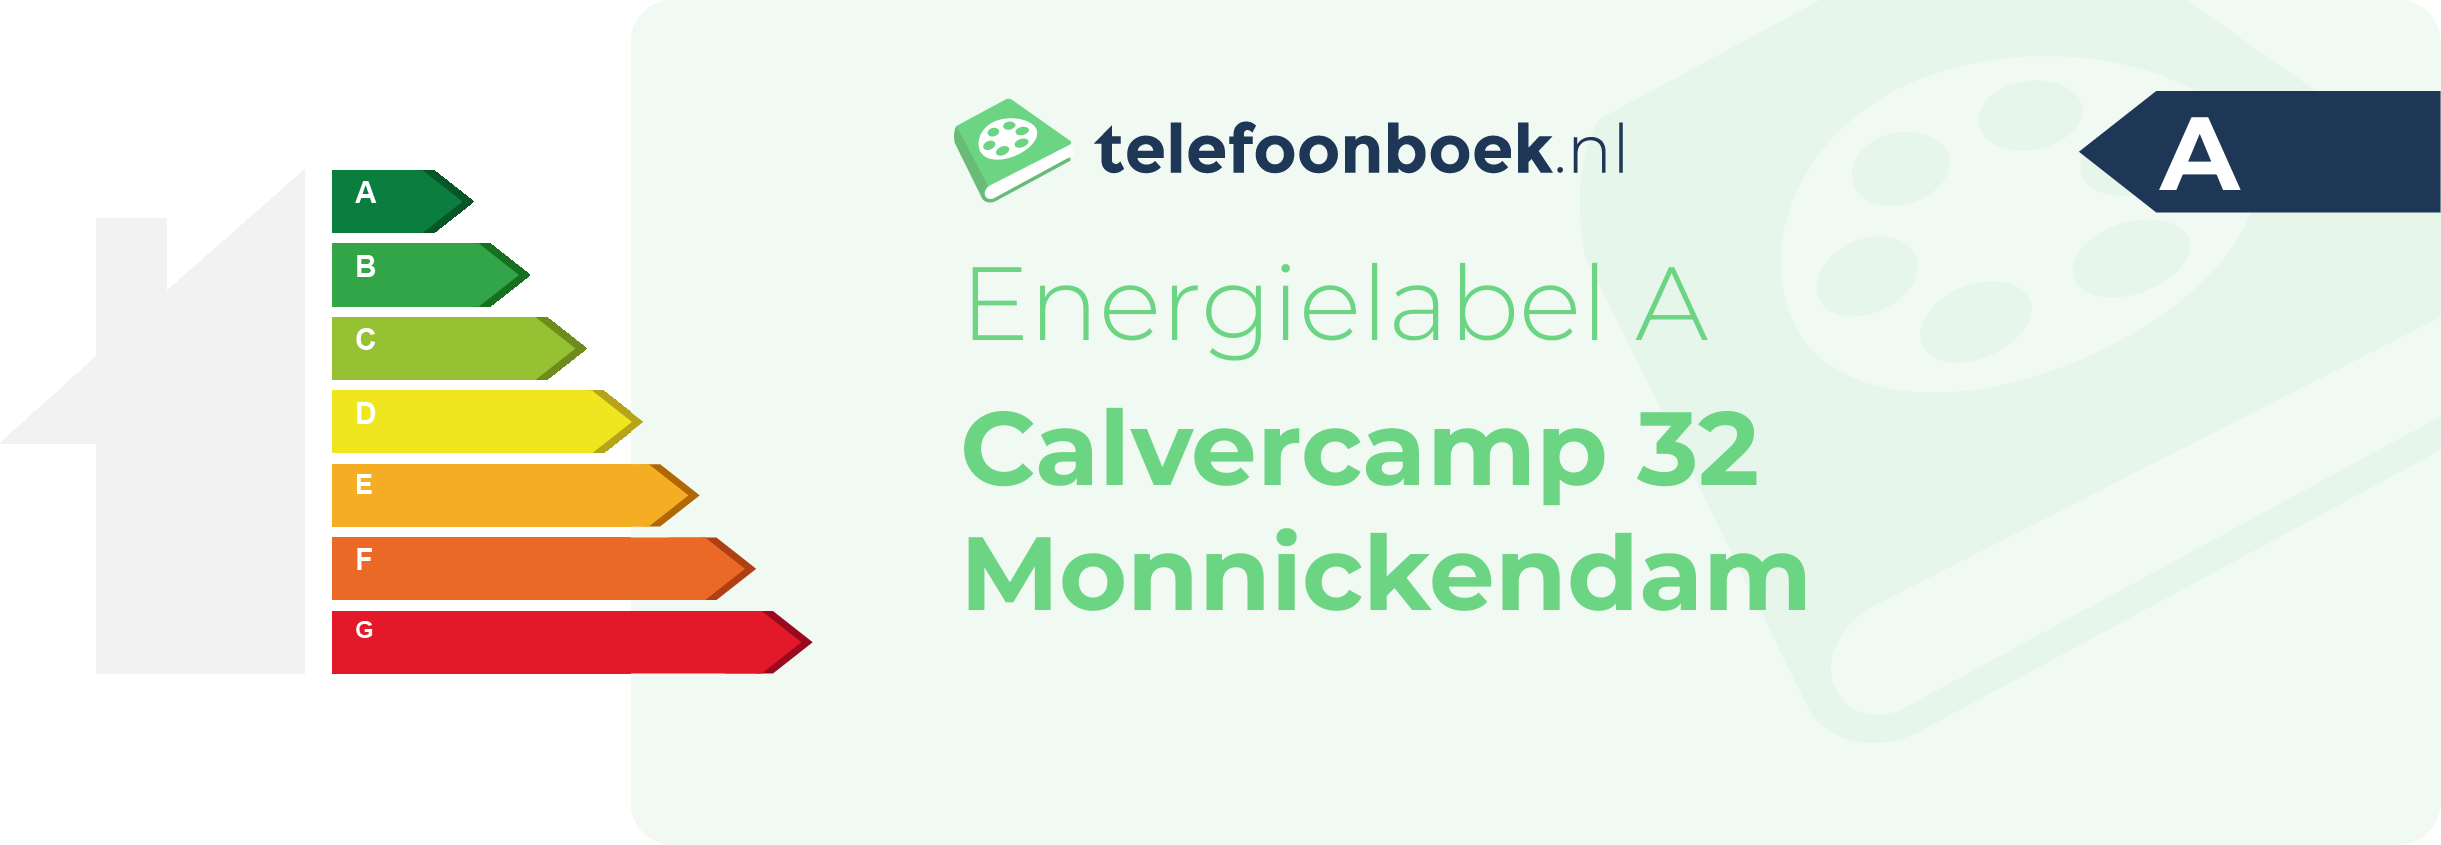 Energielabel Calvercamp 32 Monnickendam